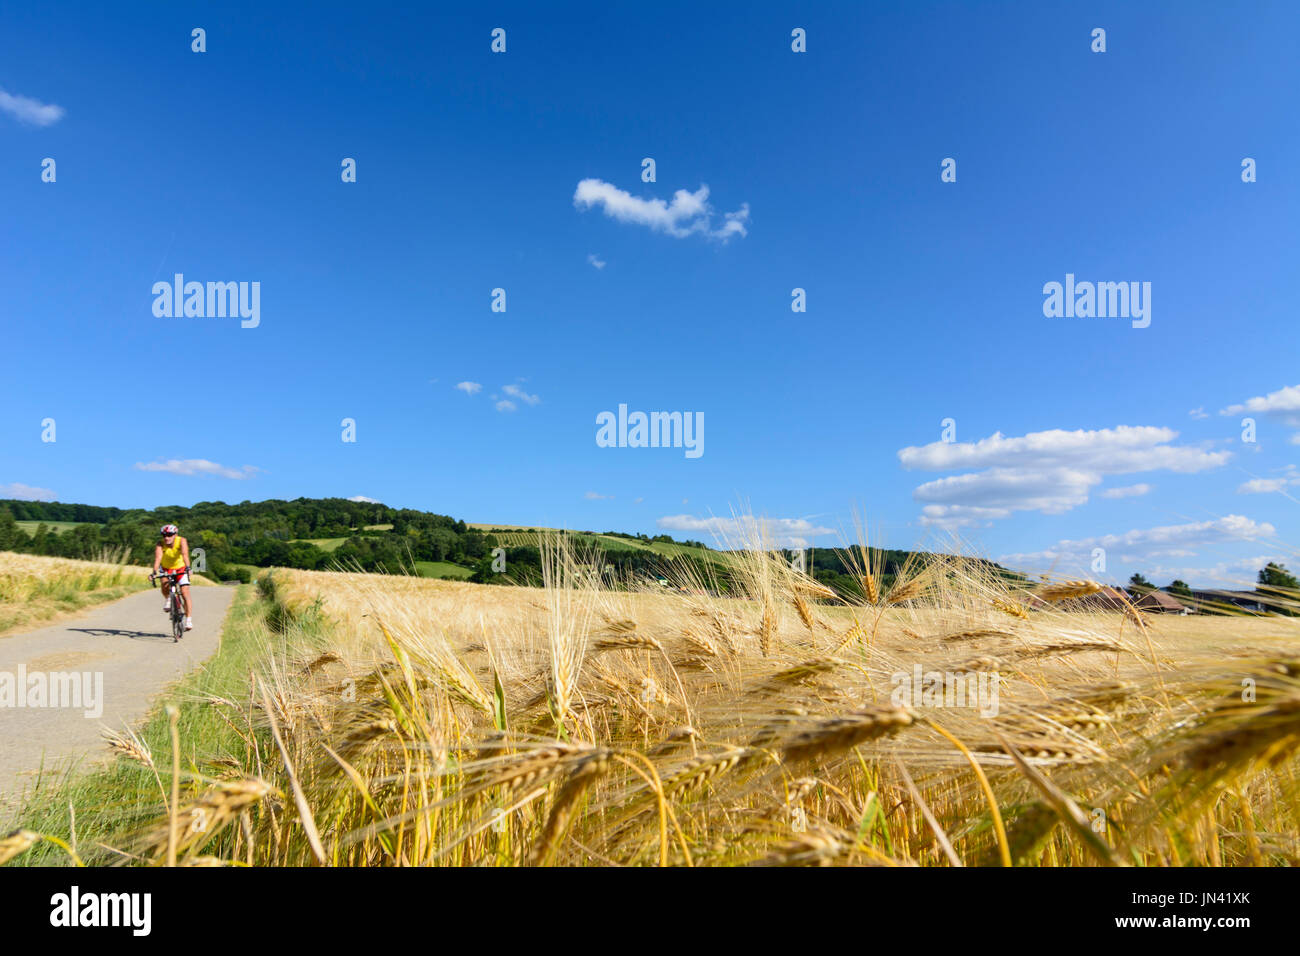 Raccolto di orzo campo di cereali, cielo blu e nuvole, ciclista, Judenau-Baumgarten, Wienerwald, Vienna Woods, Niederösterreich, Austria Inferiore, Austria Foto Stock